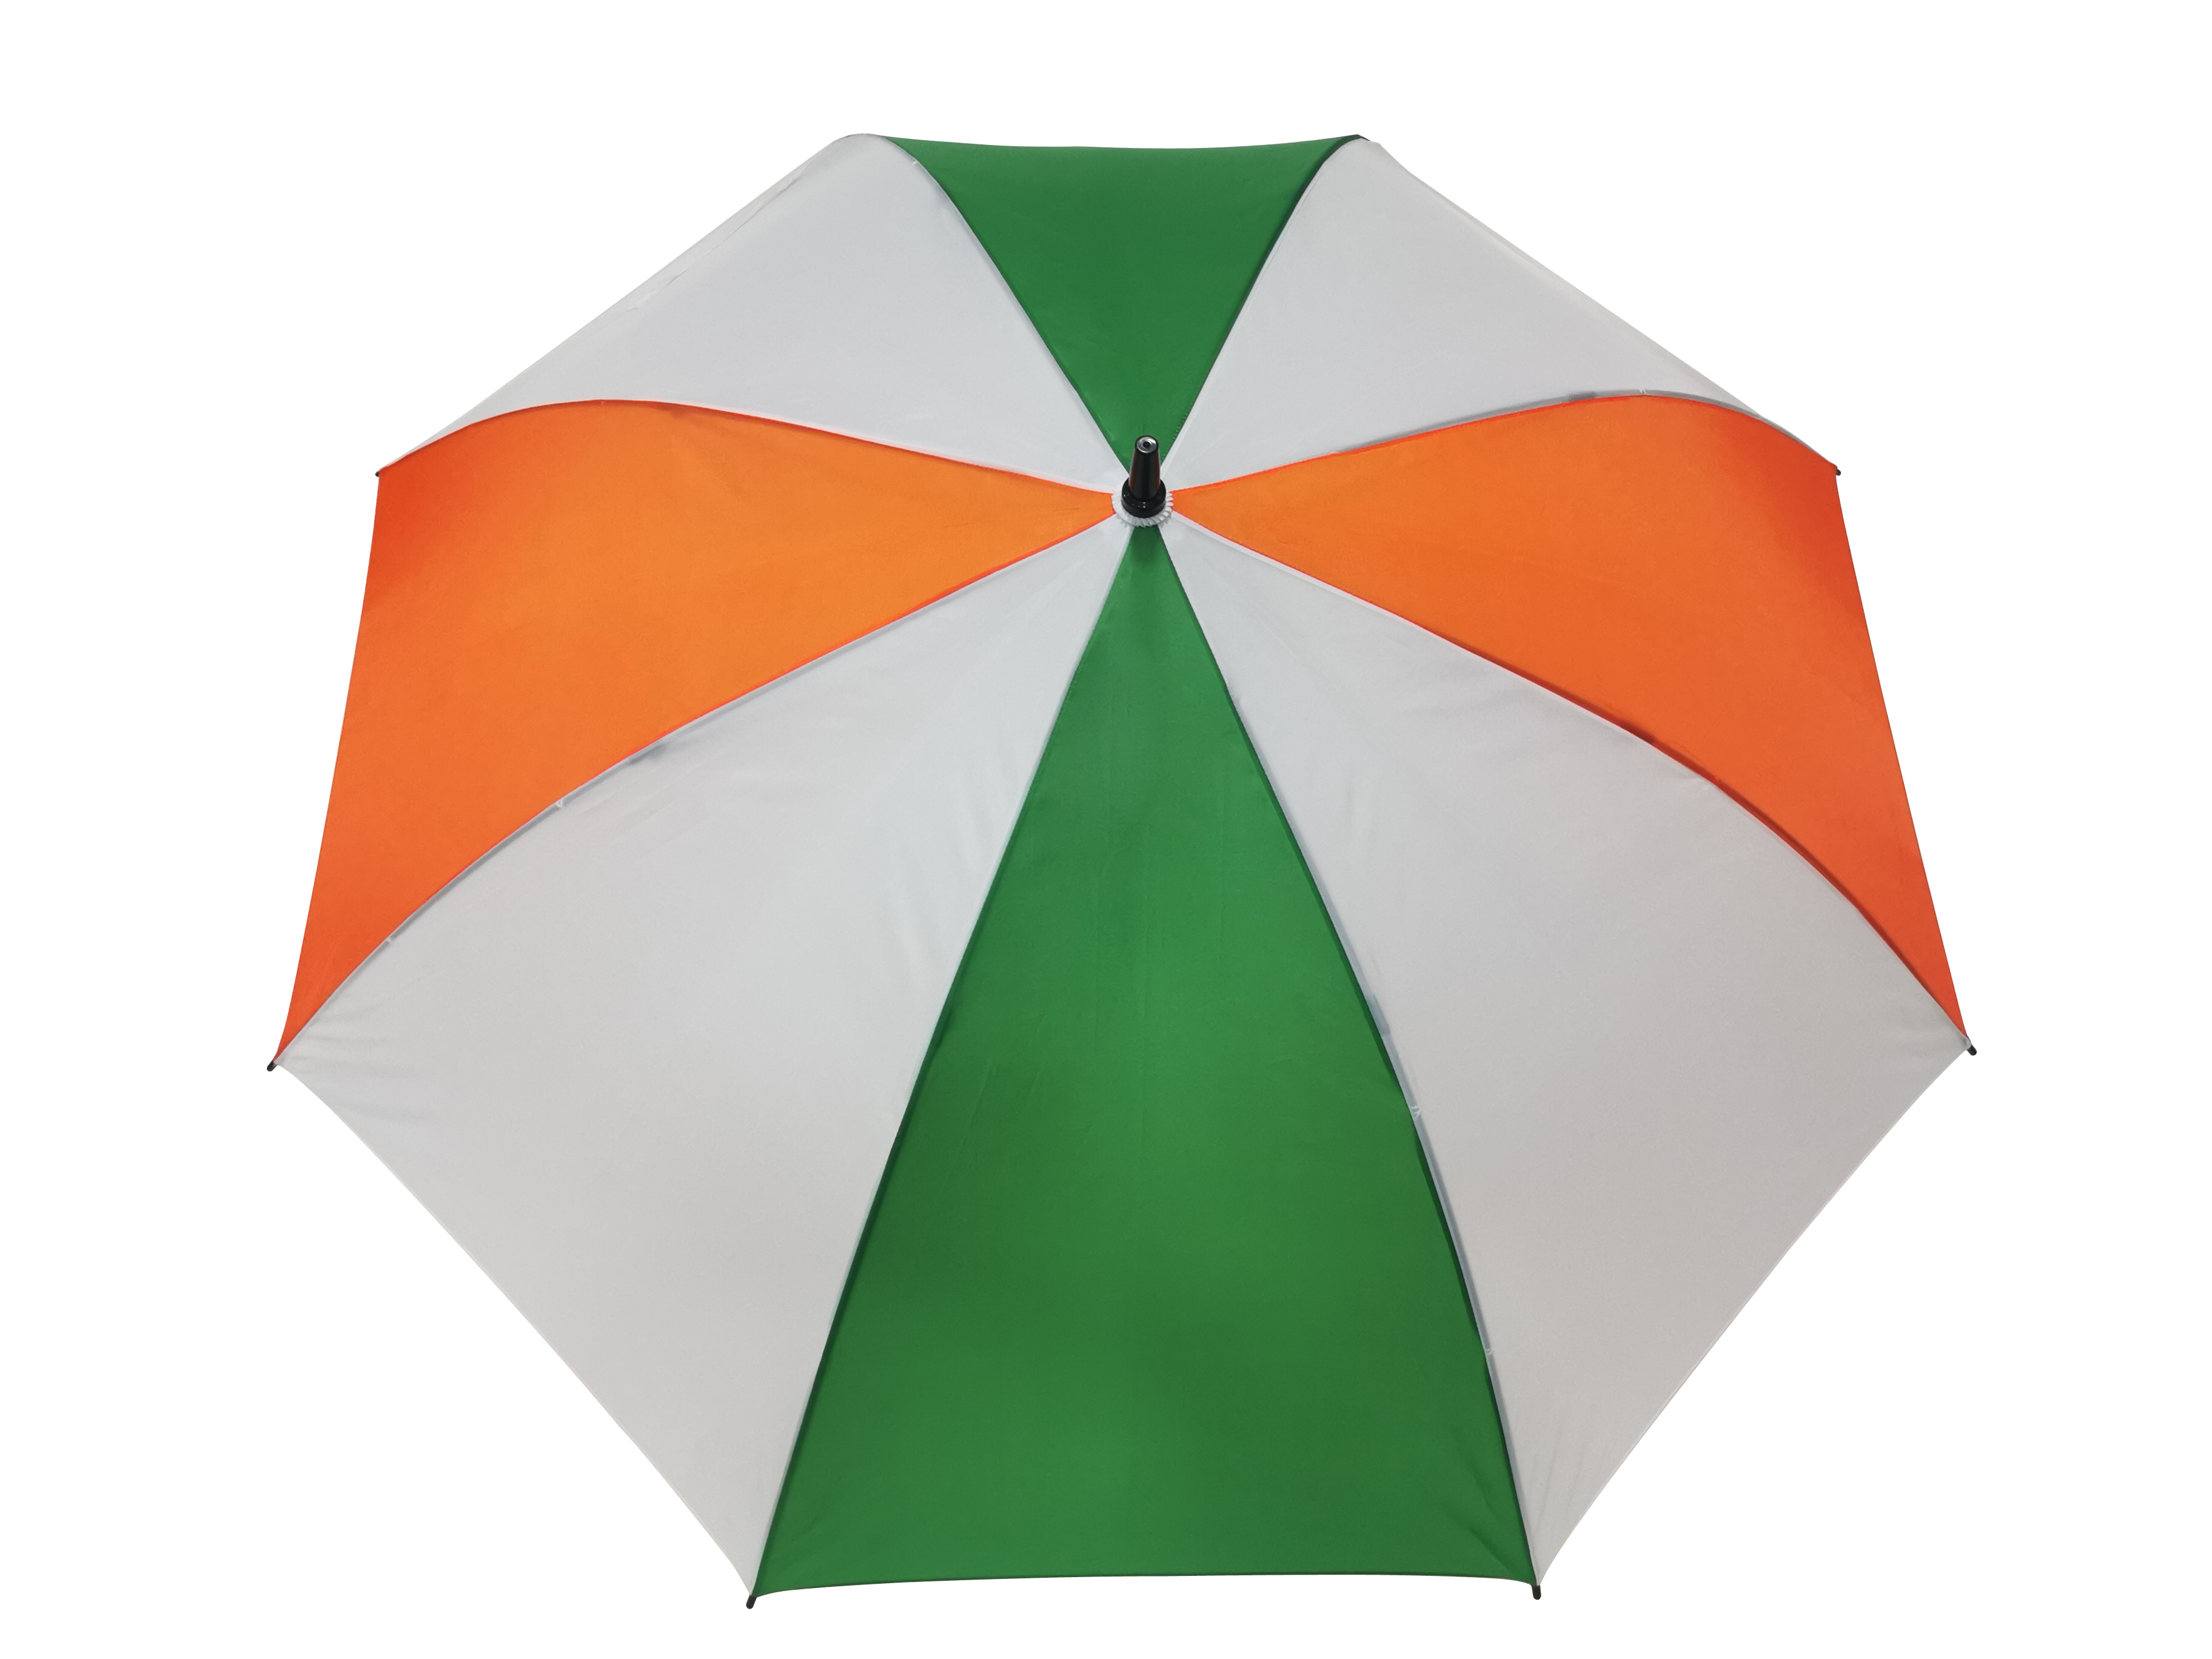 https://www.hodaumbrella.com/golf-umbrella-with-double-layer-umbrella-fabric-product/